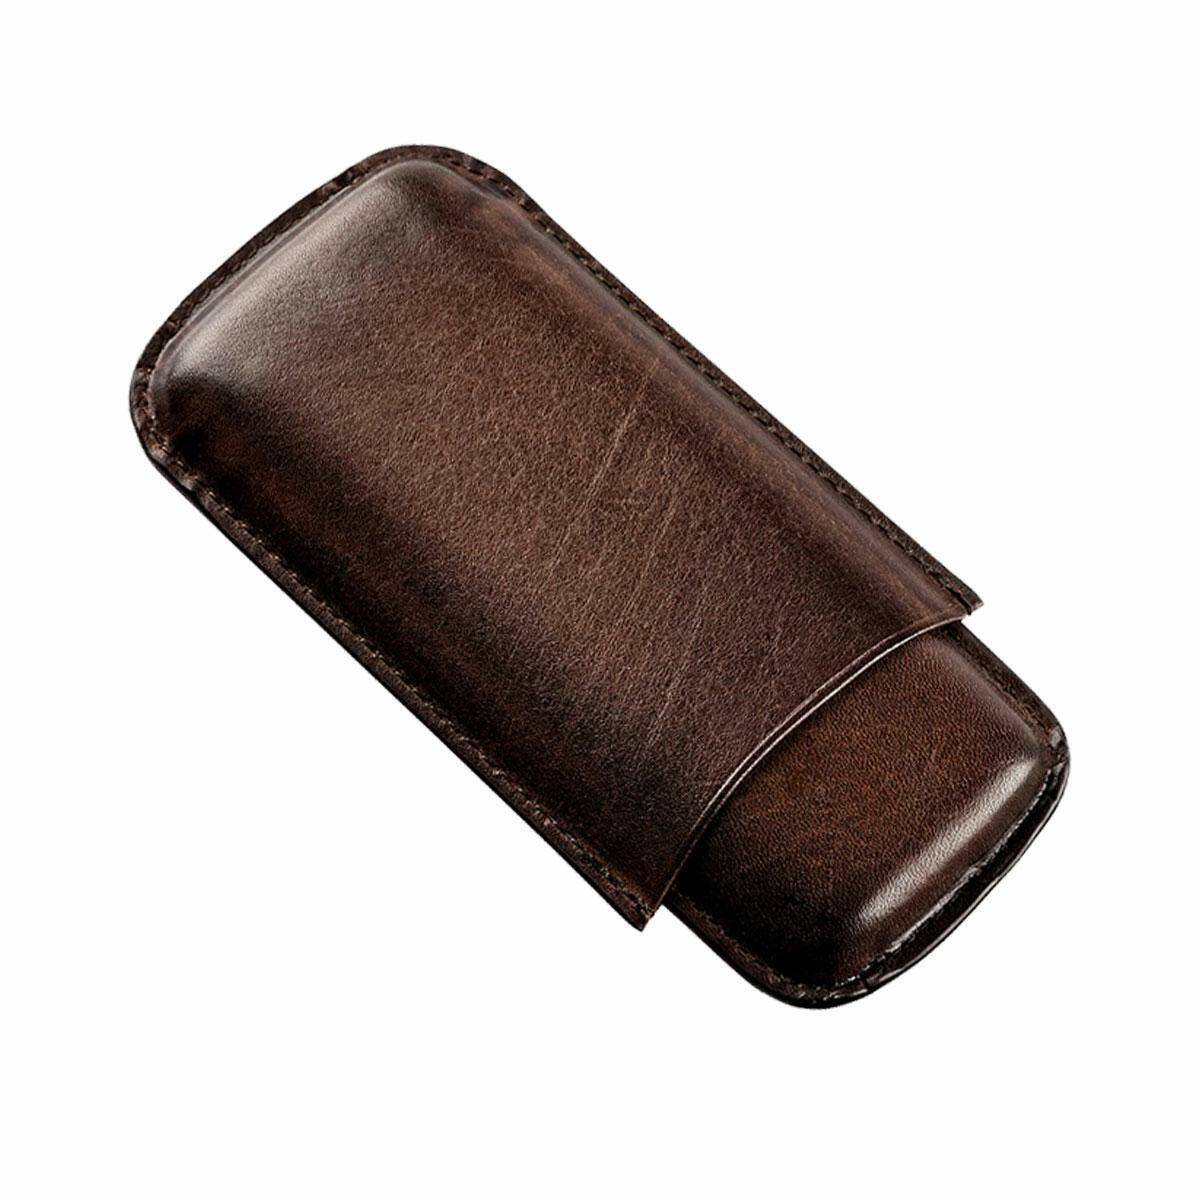 Case for 3 cigar, dark brown leather